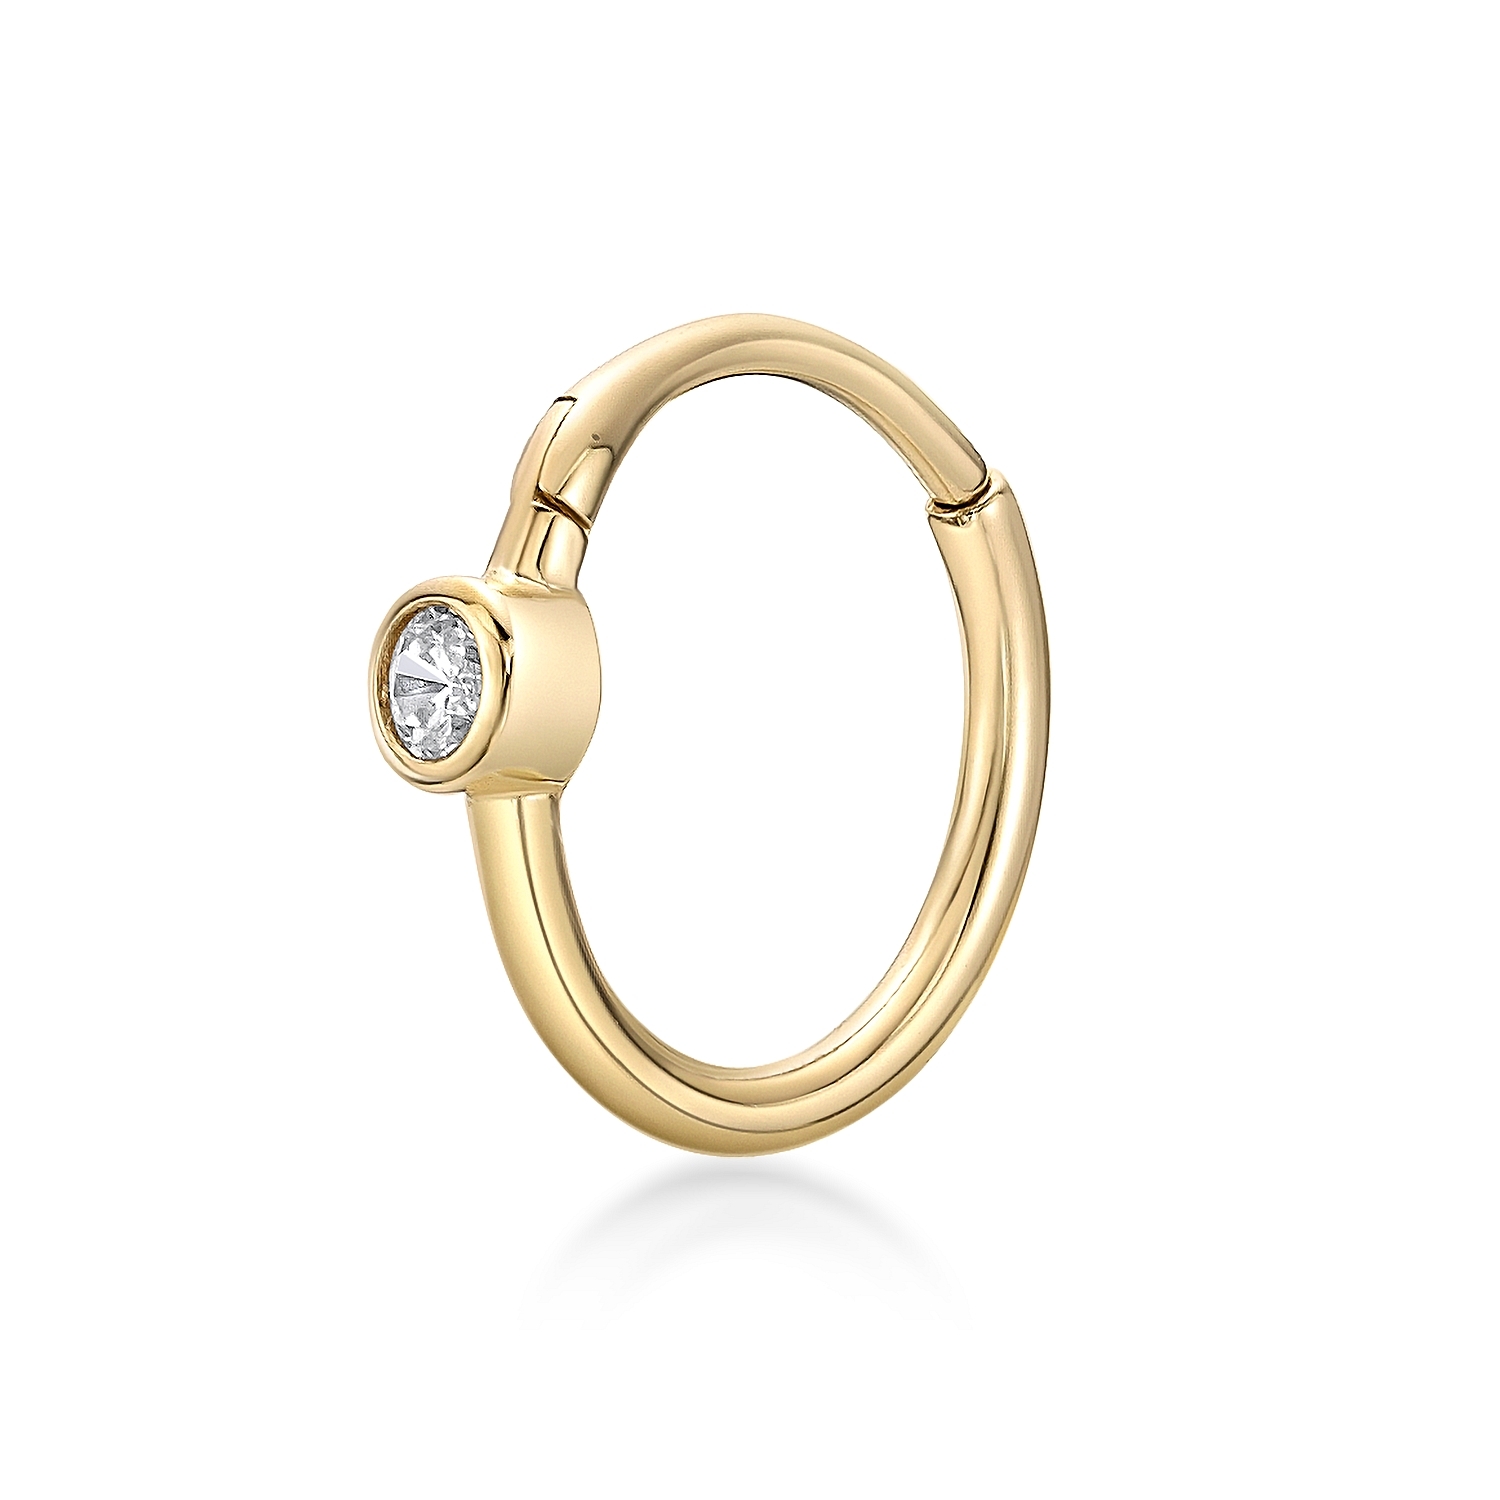 Lavari Jewelers Women's 10 MM Hoop Nose Ring with Multi-Purpose Clicker, 14K Yellow Gold, 2 MM Cubic Zirconia, 20 Gauge